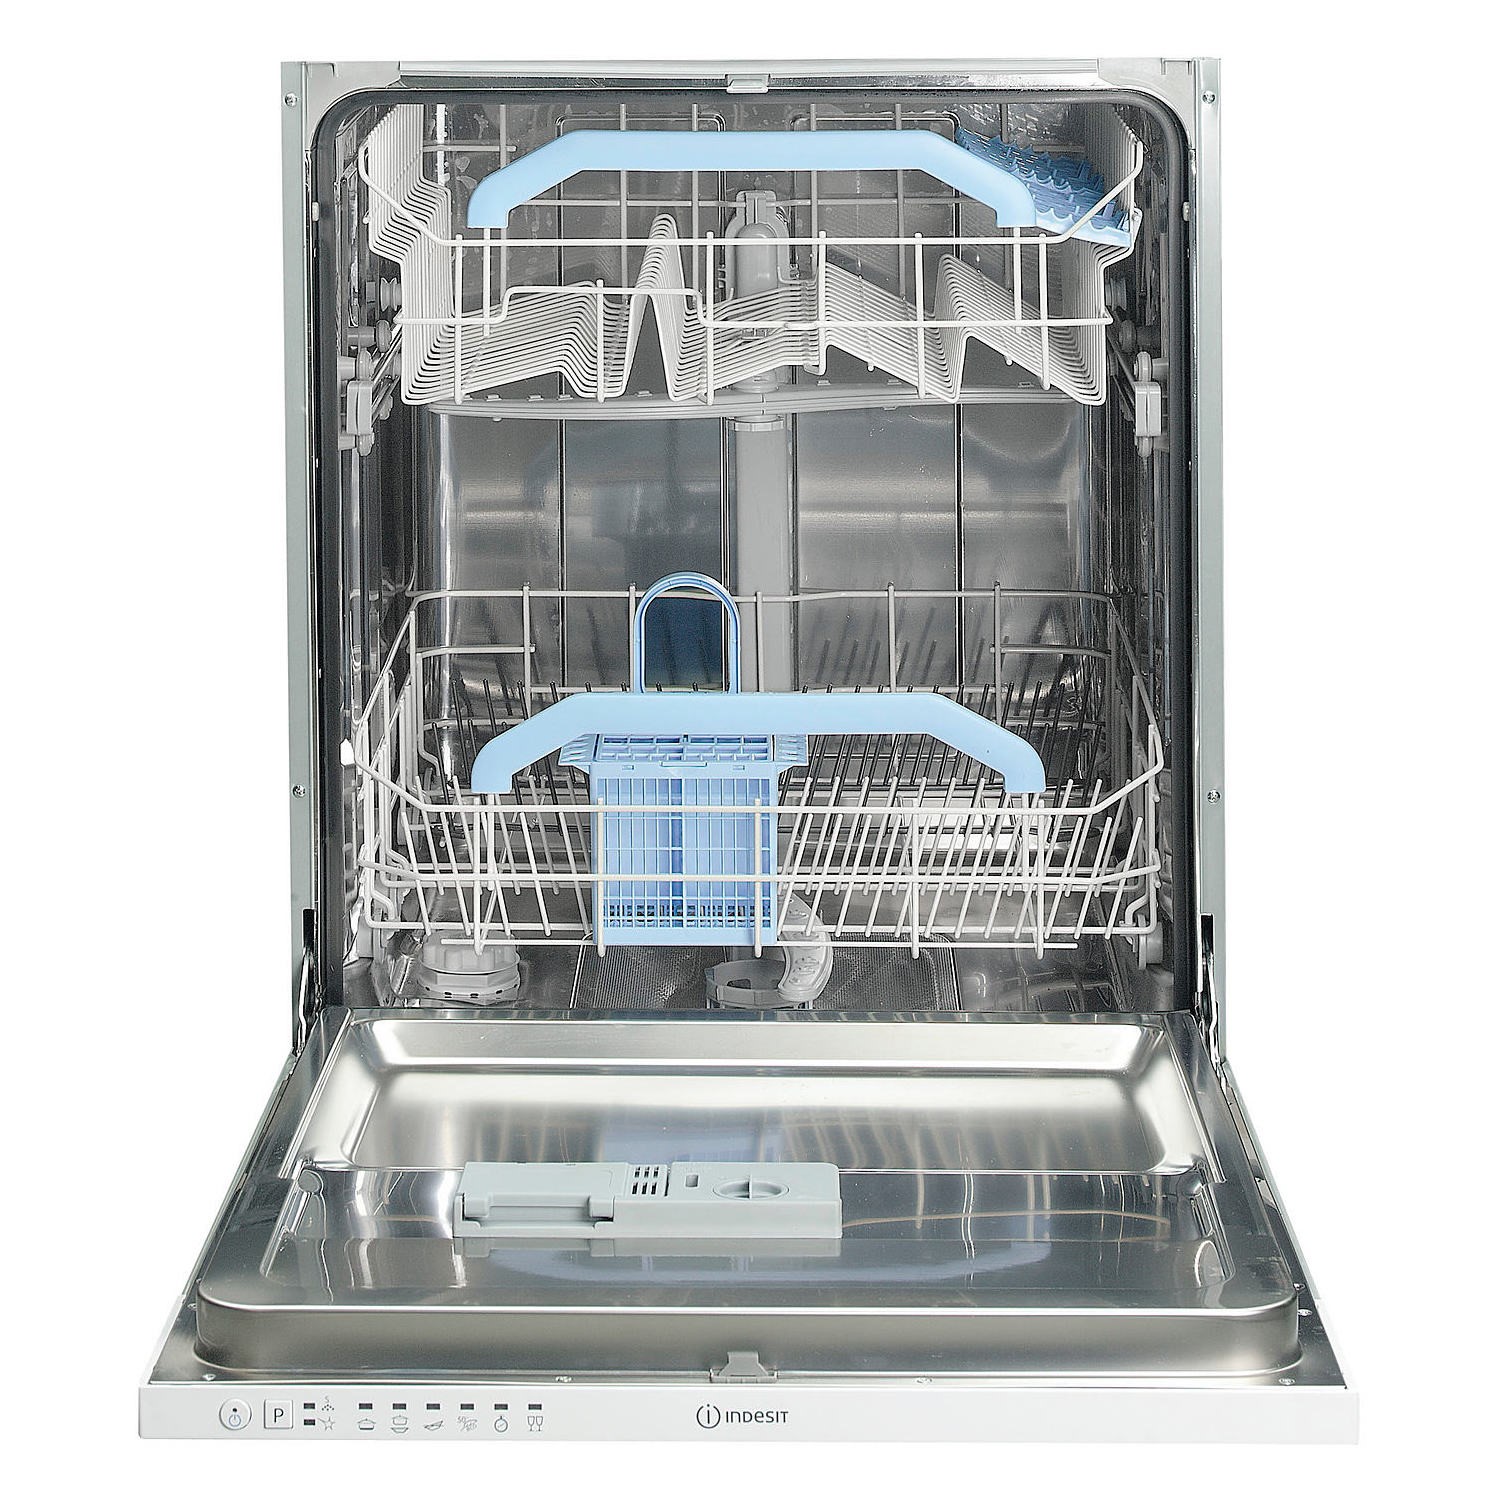 Fully Integrated Dishwasher 